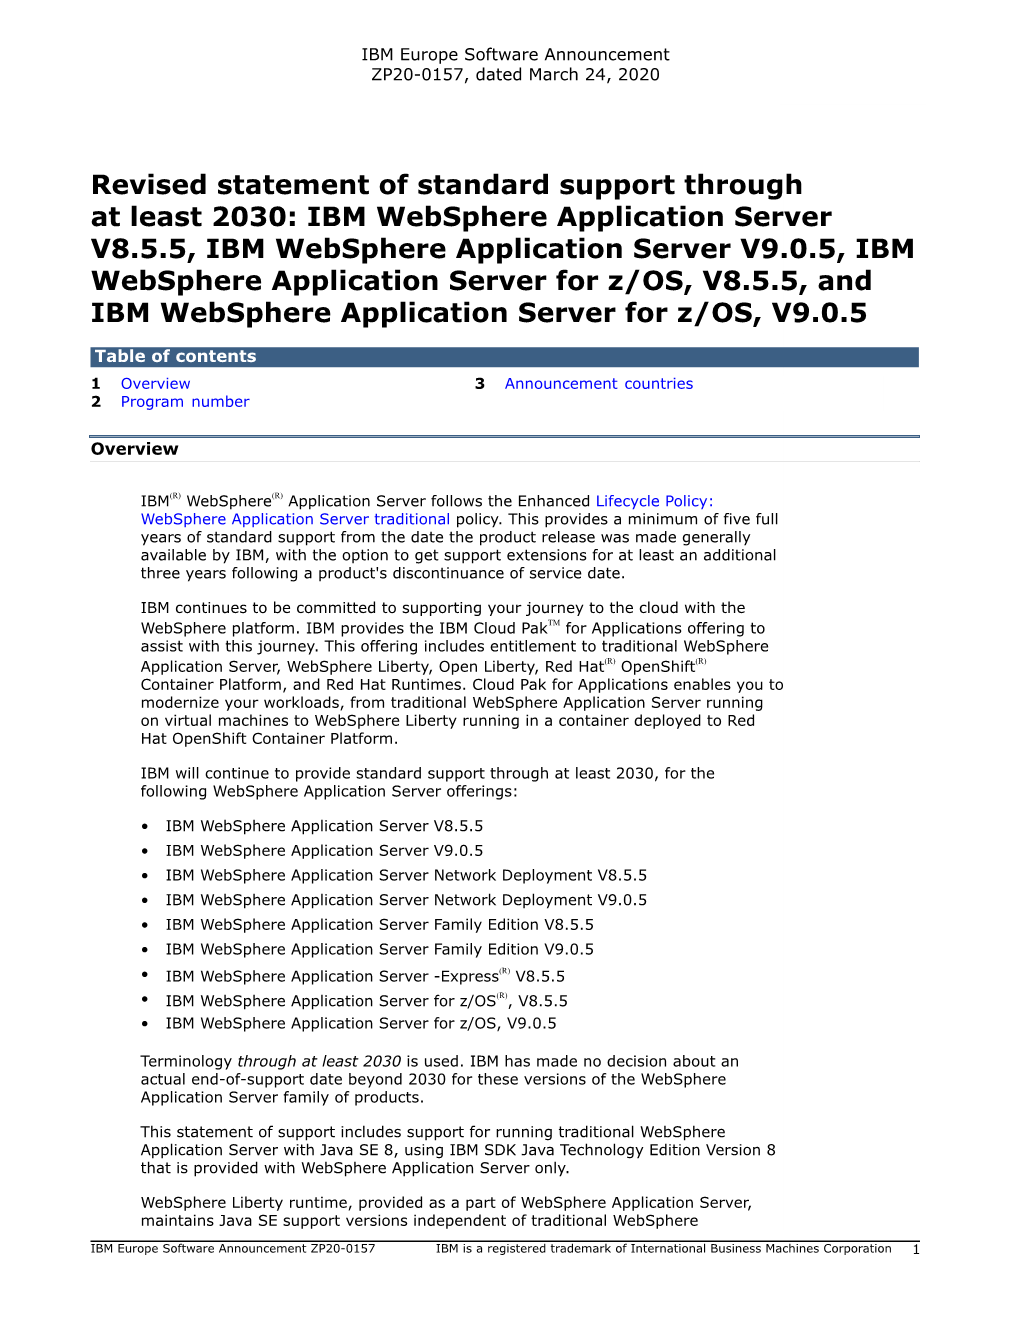 Revised Statement of Standard Support Through at Least 2030: IBM Websphere Application Server V8.5.5, IBM Websphere Applicati